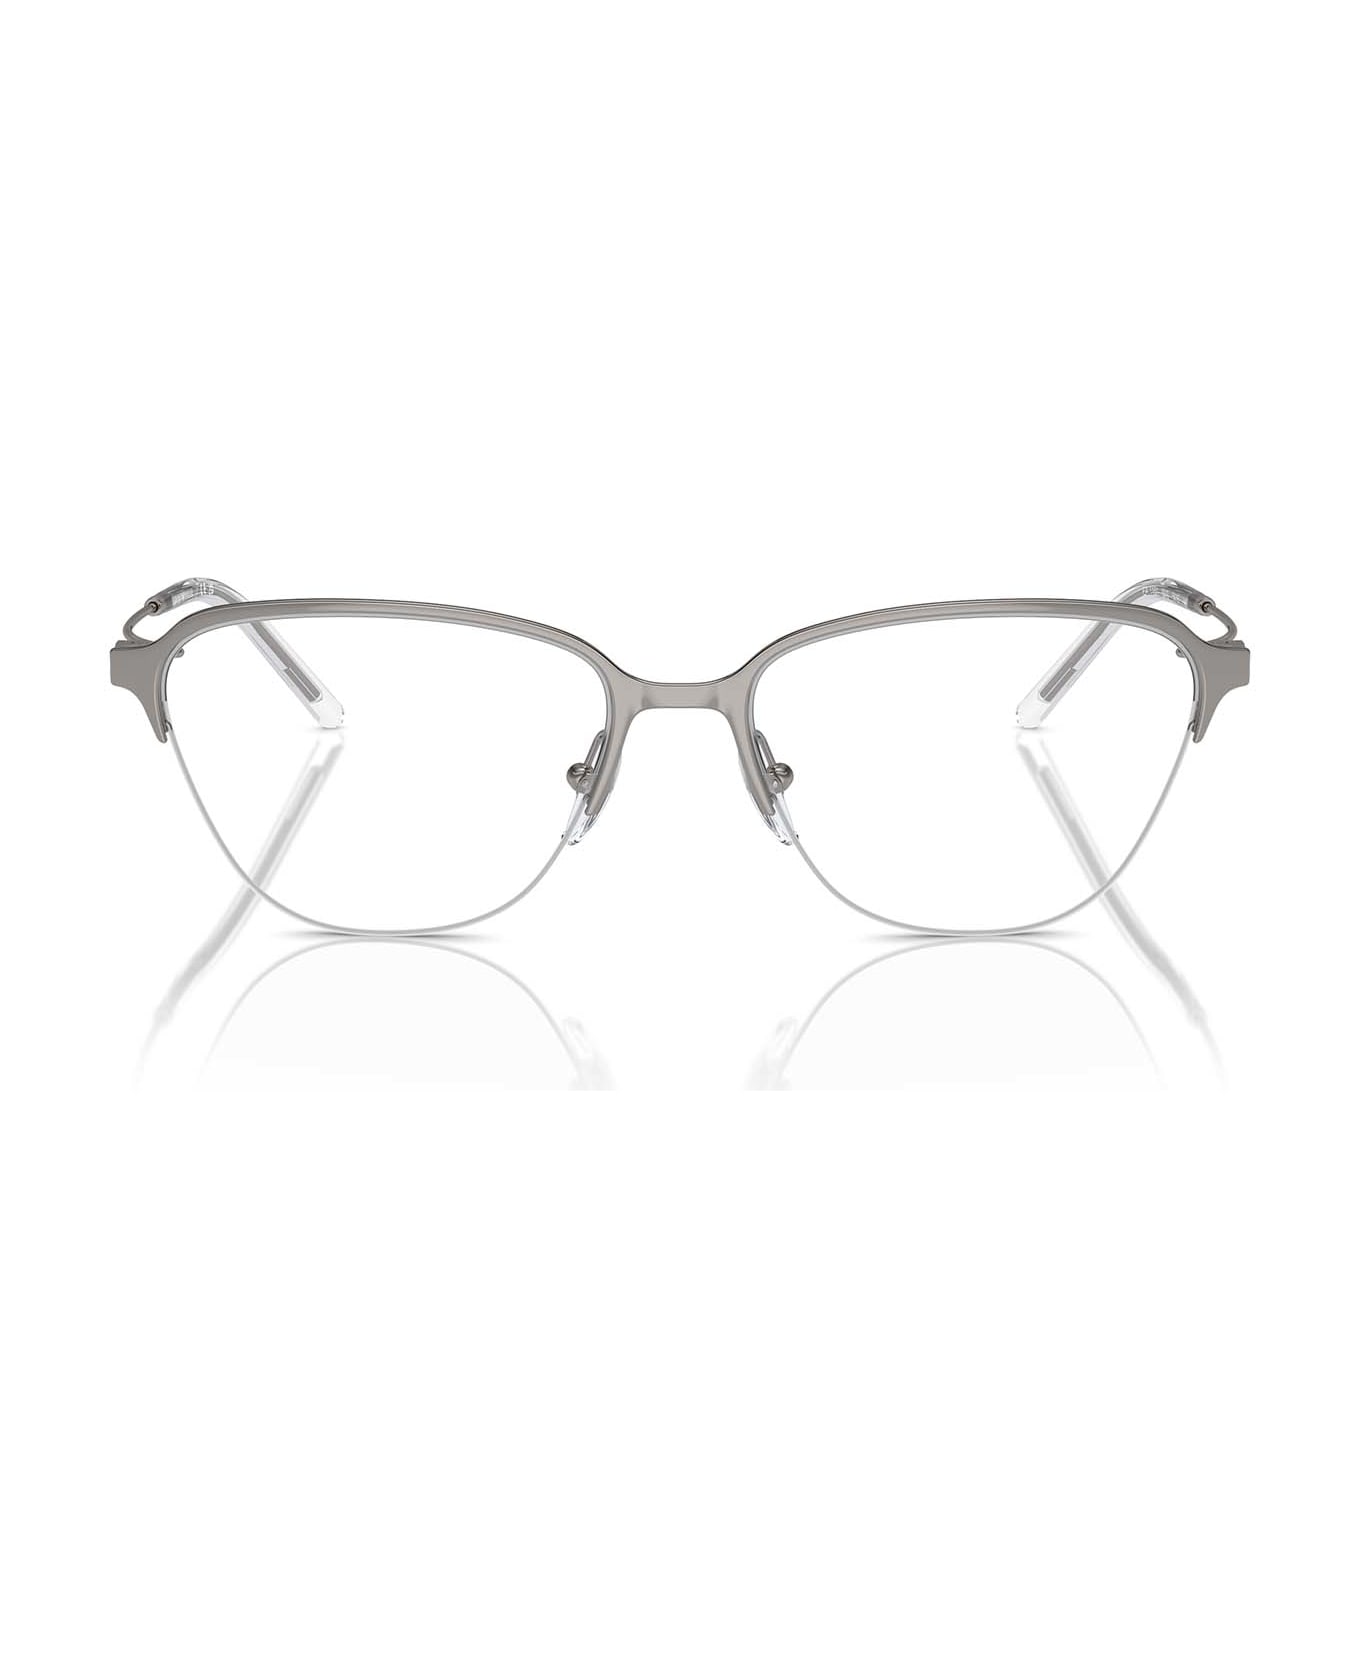 Emporio Armani Ea1161 Shiny Gunmetal Glasses - Shiny Gunmetal アイウェア